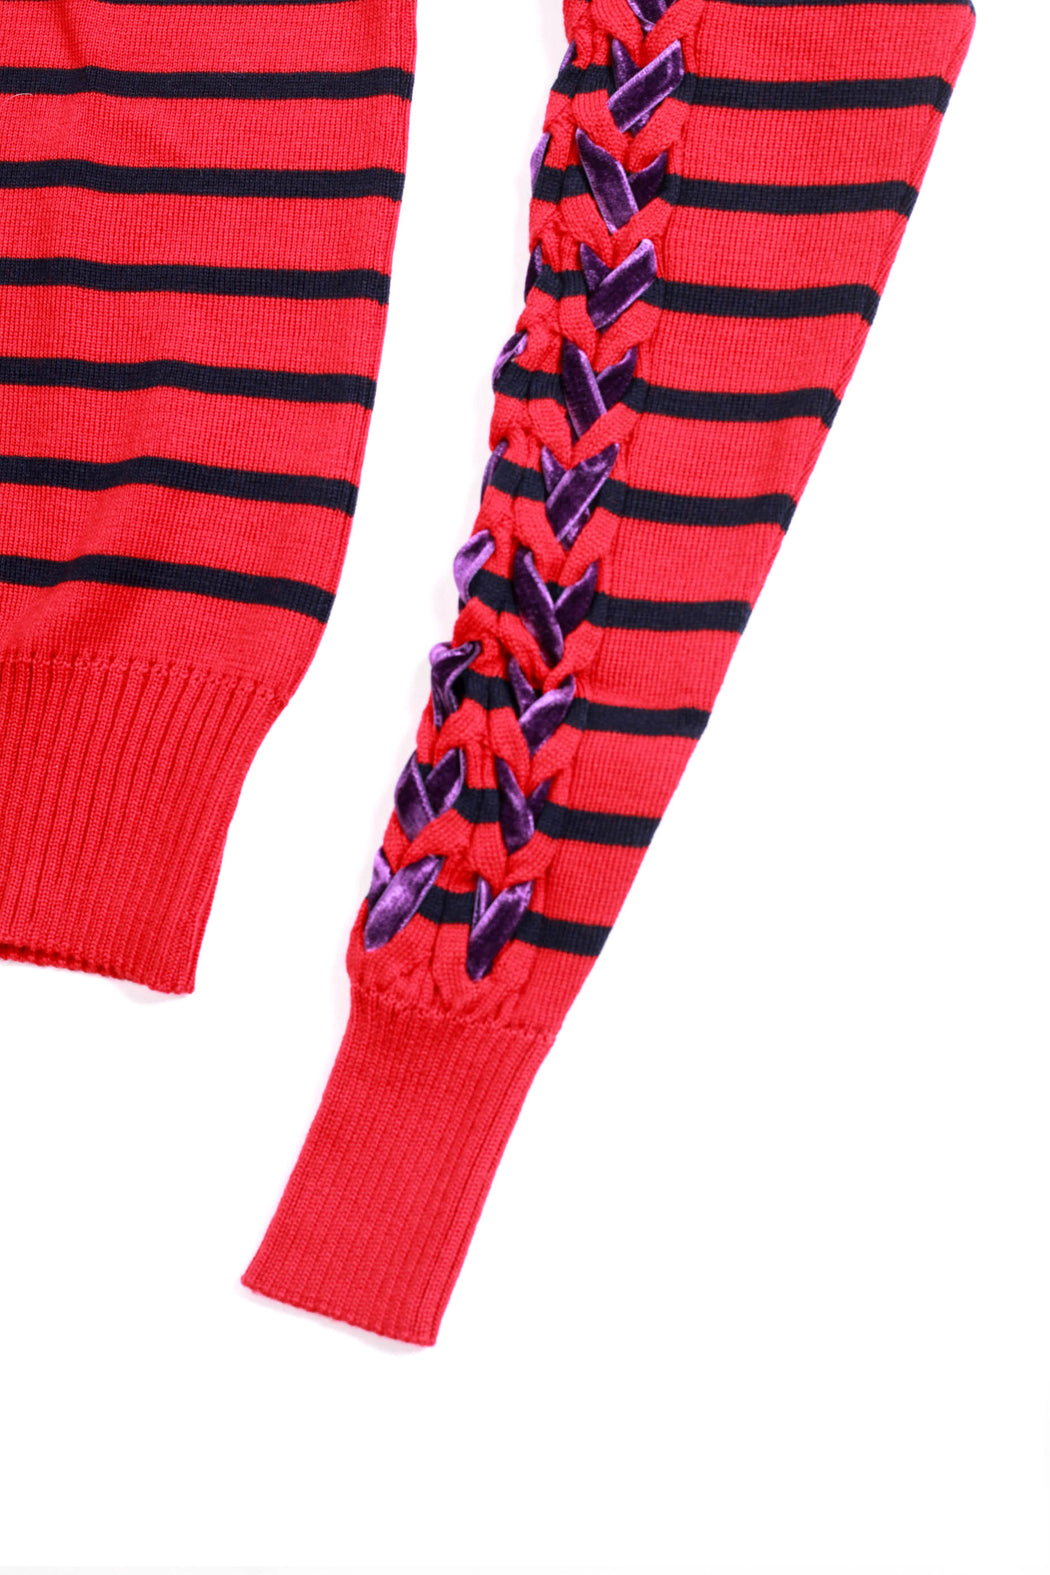 Stripe Pullover - Red/Navy